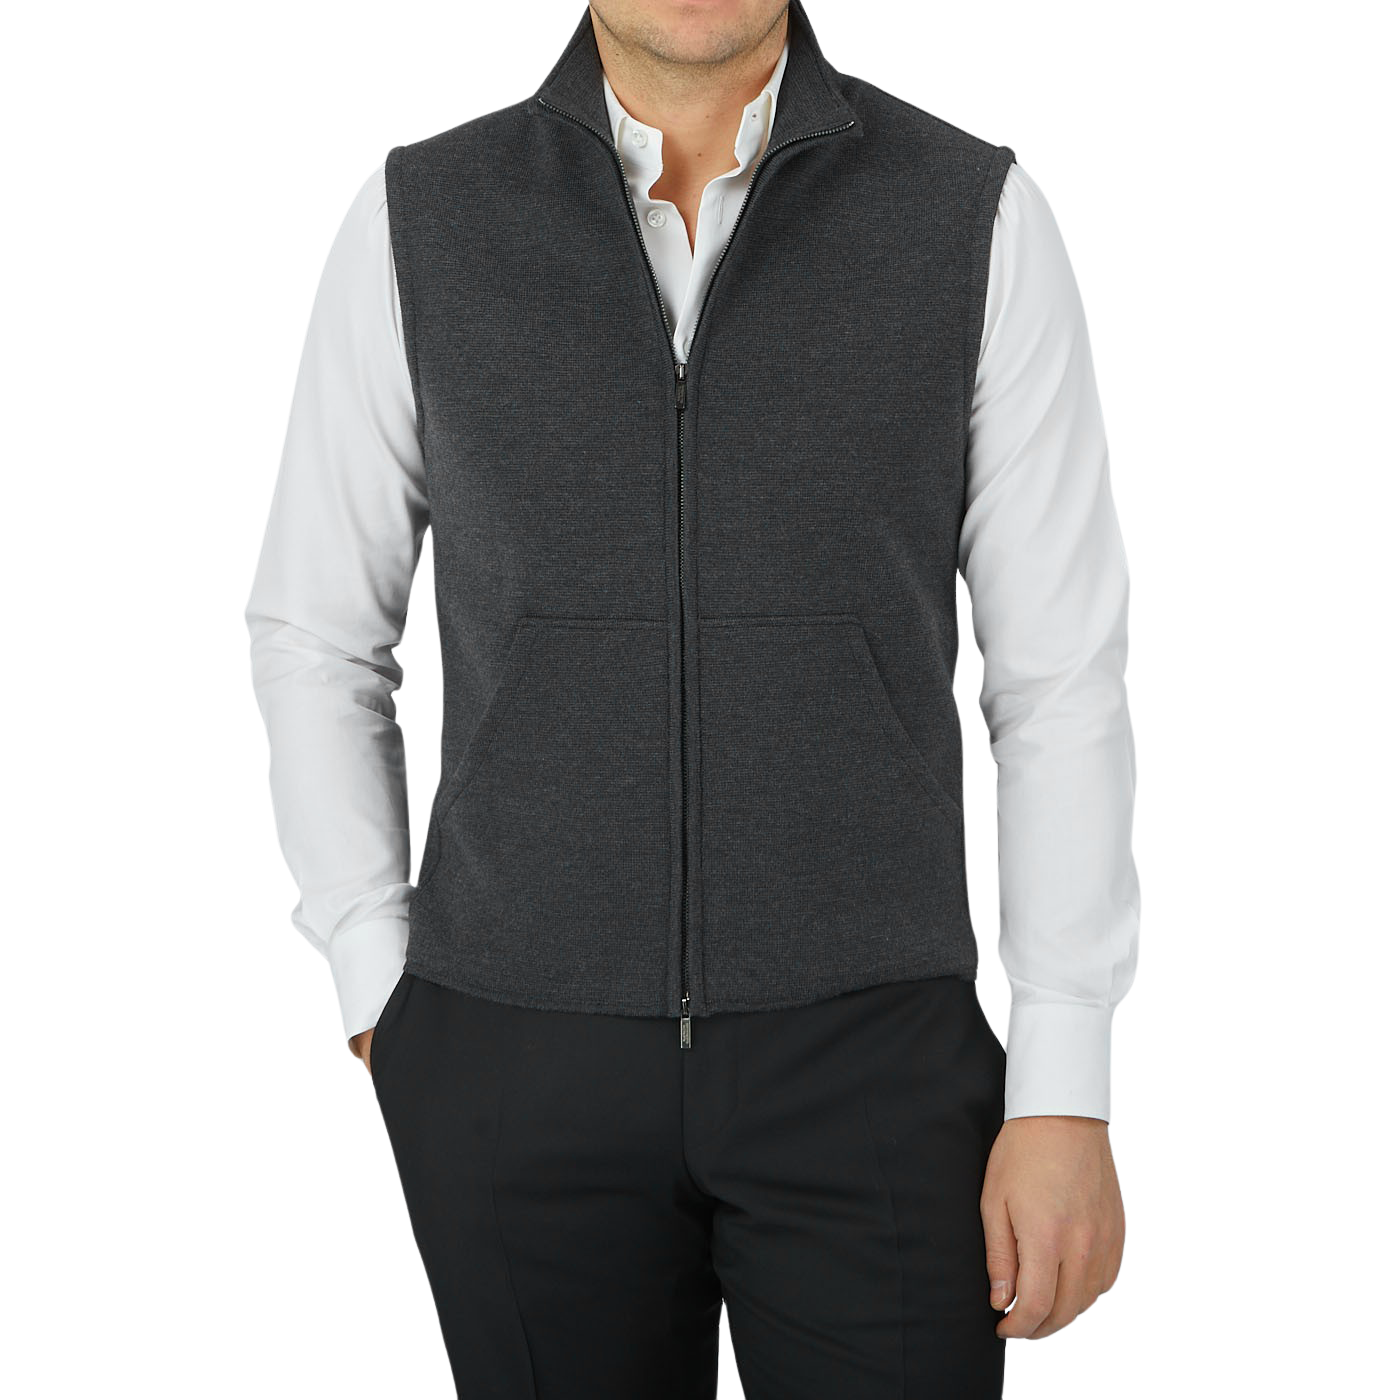 A man wearing a Charcoal Grey Maurizio Baldassari Milano Stitch Wool Zip Gilet and a black shirt.